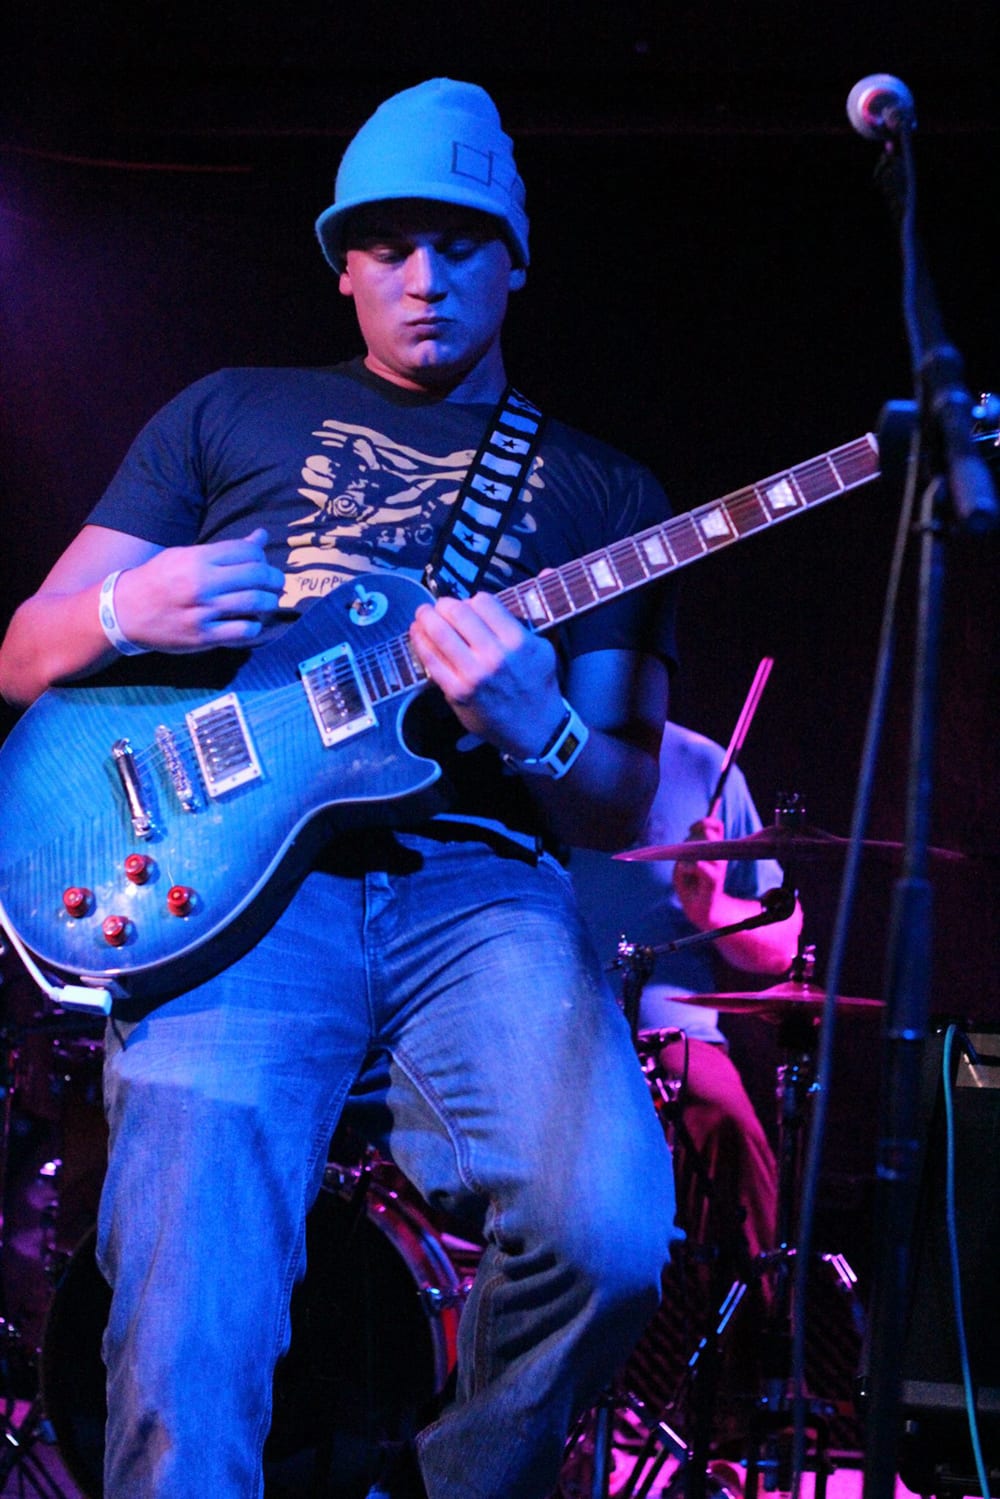 Adam playing guitar